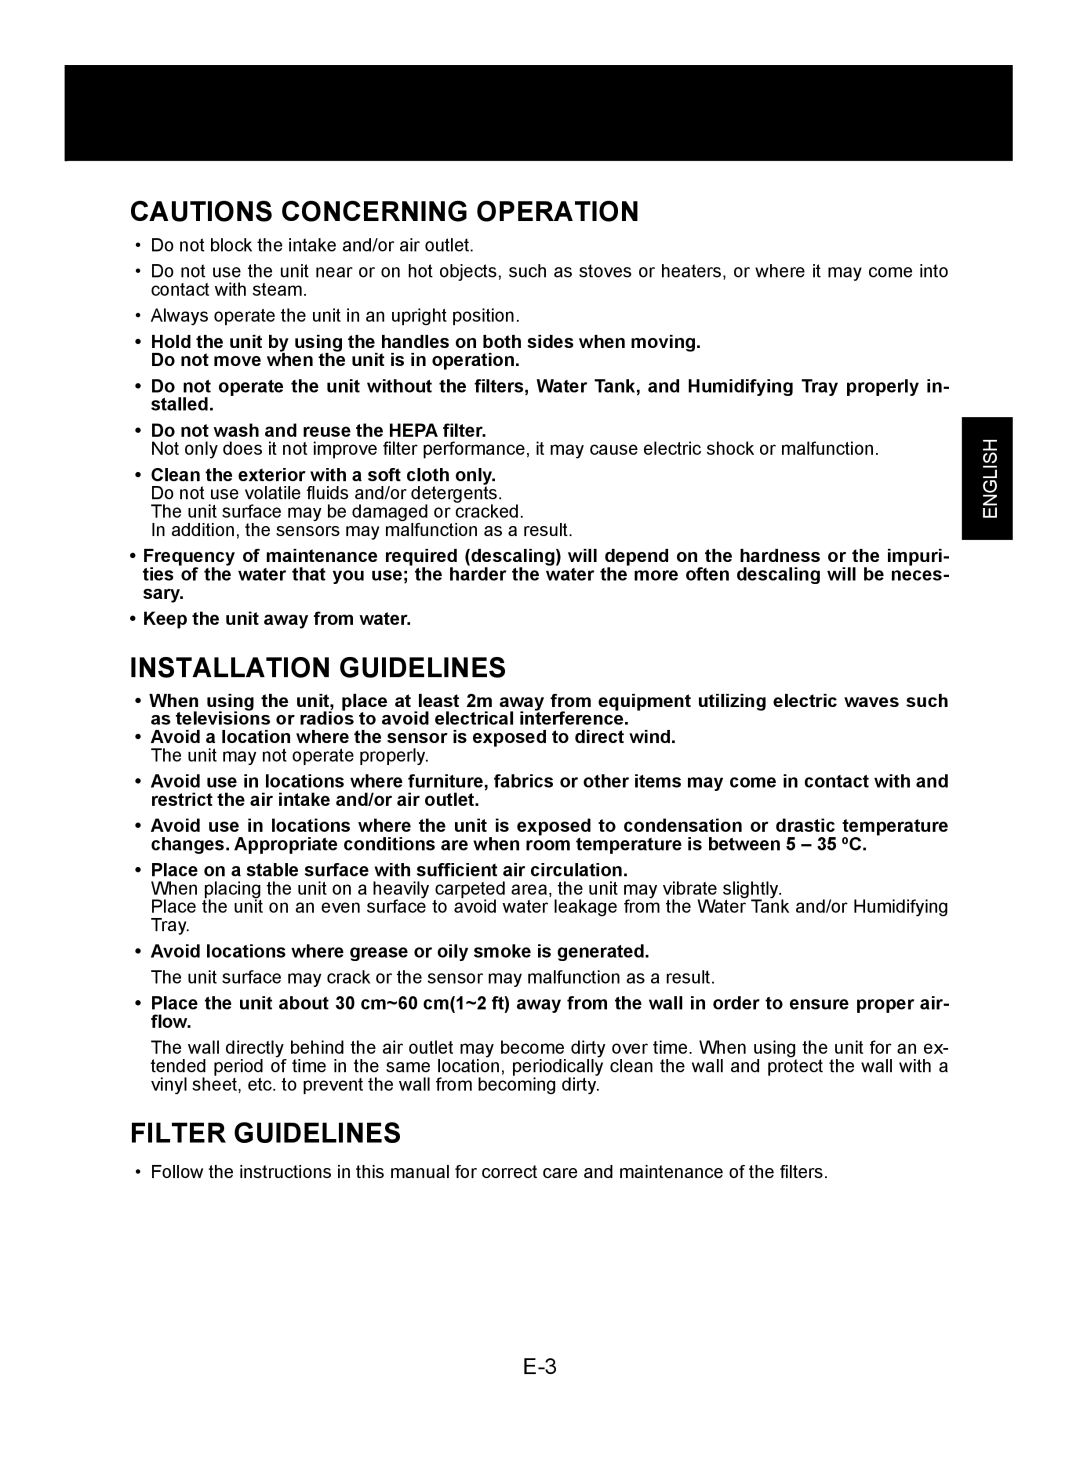 Sharp KC-850EK, KC-860EK operation manual Cautions Concerning Operation, Installation Guidelines, Filter Guidelines, English 